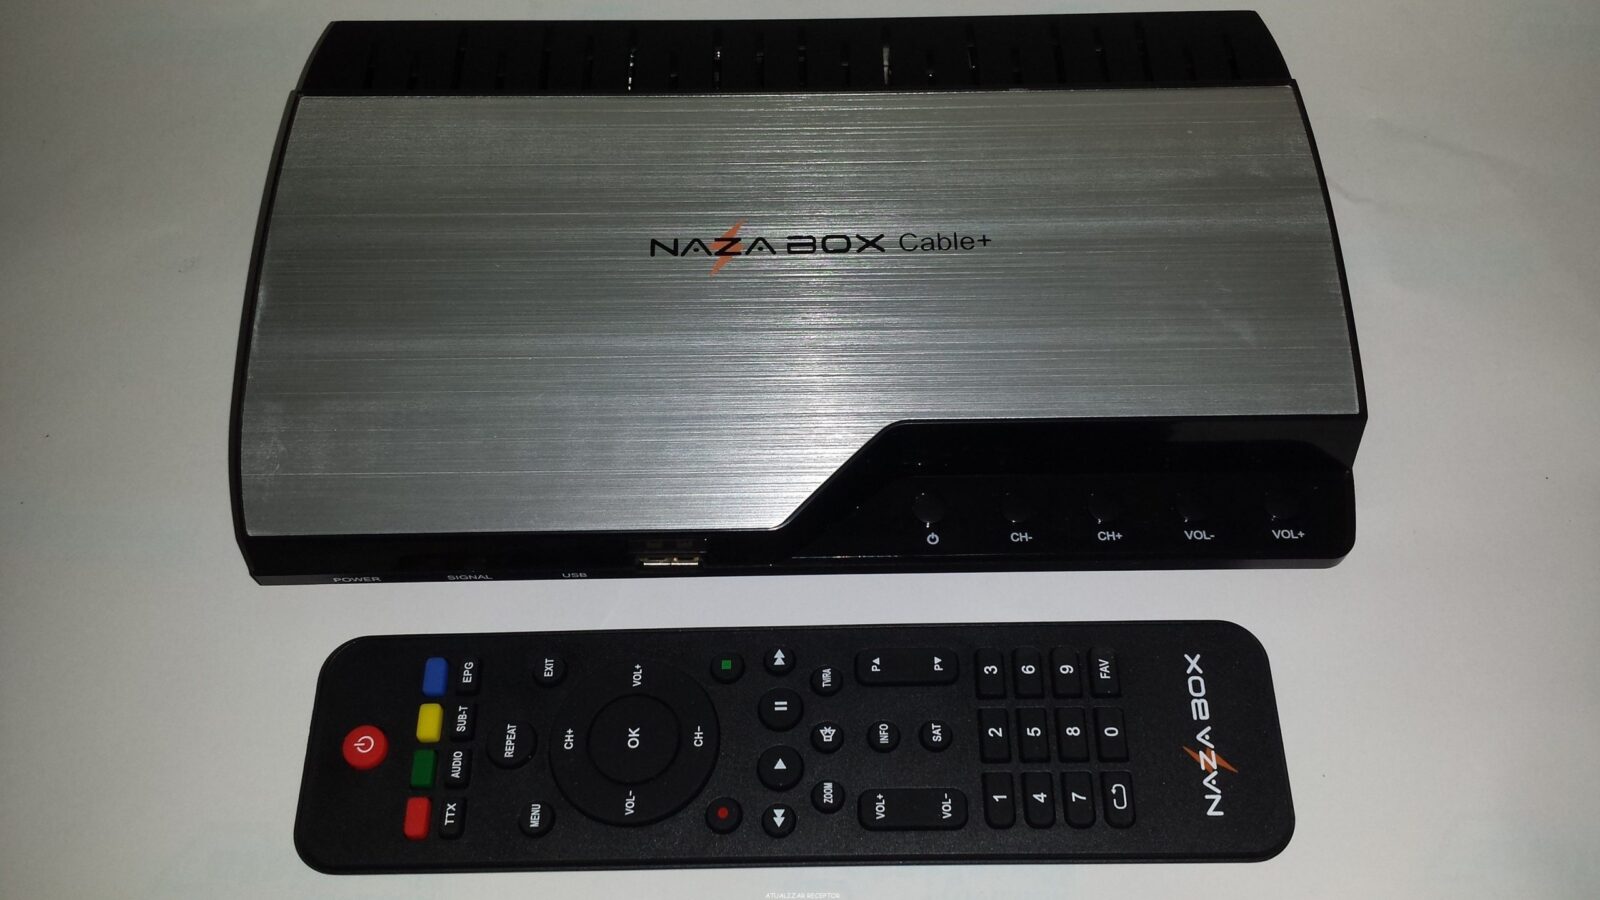 NazaBox Cable HD Mini